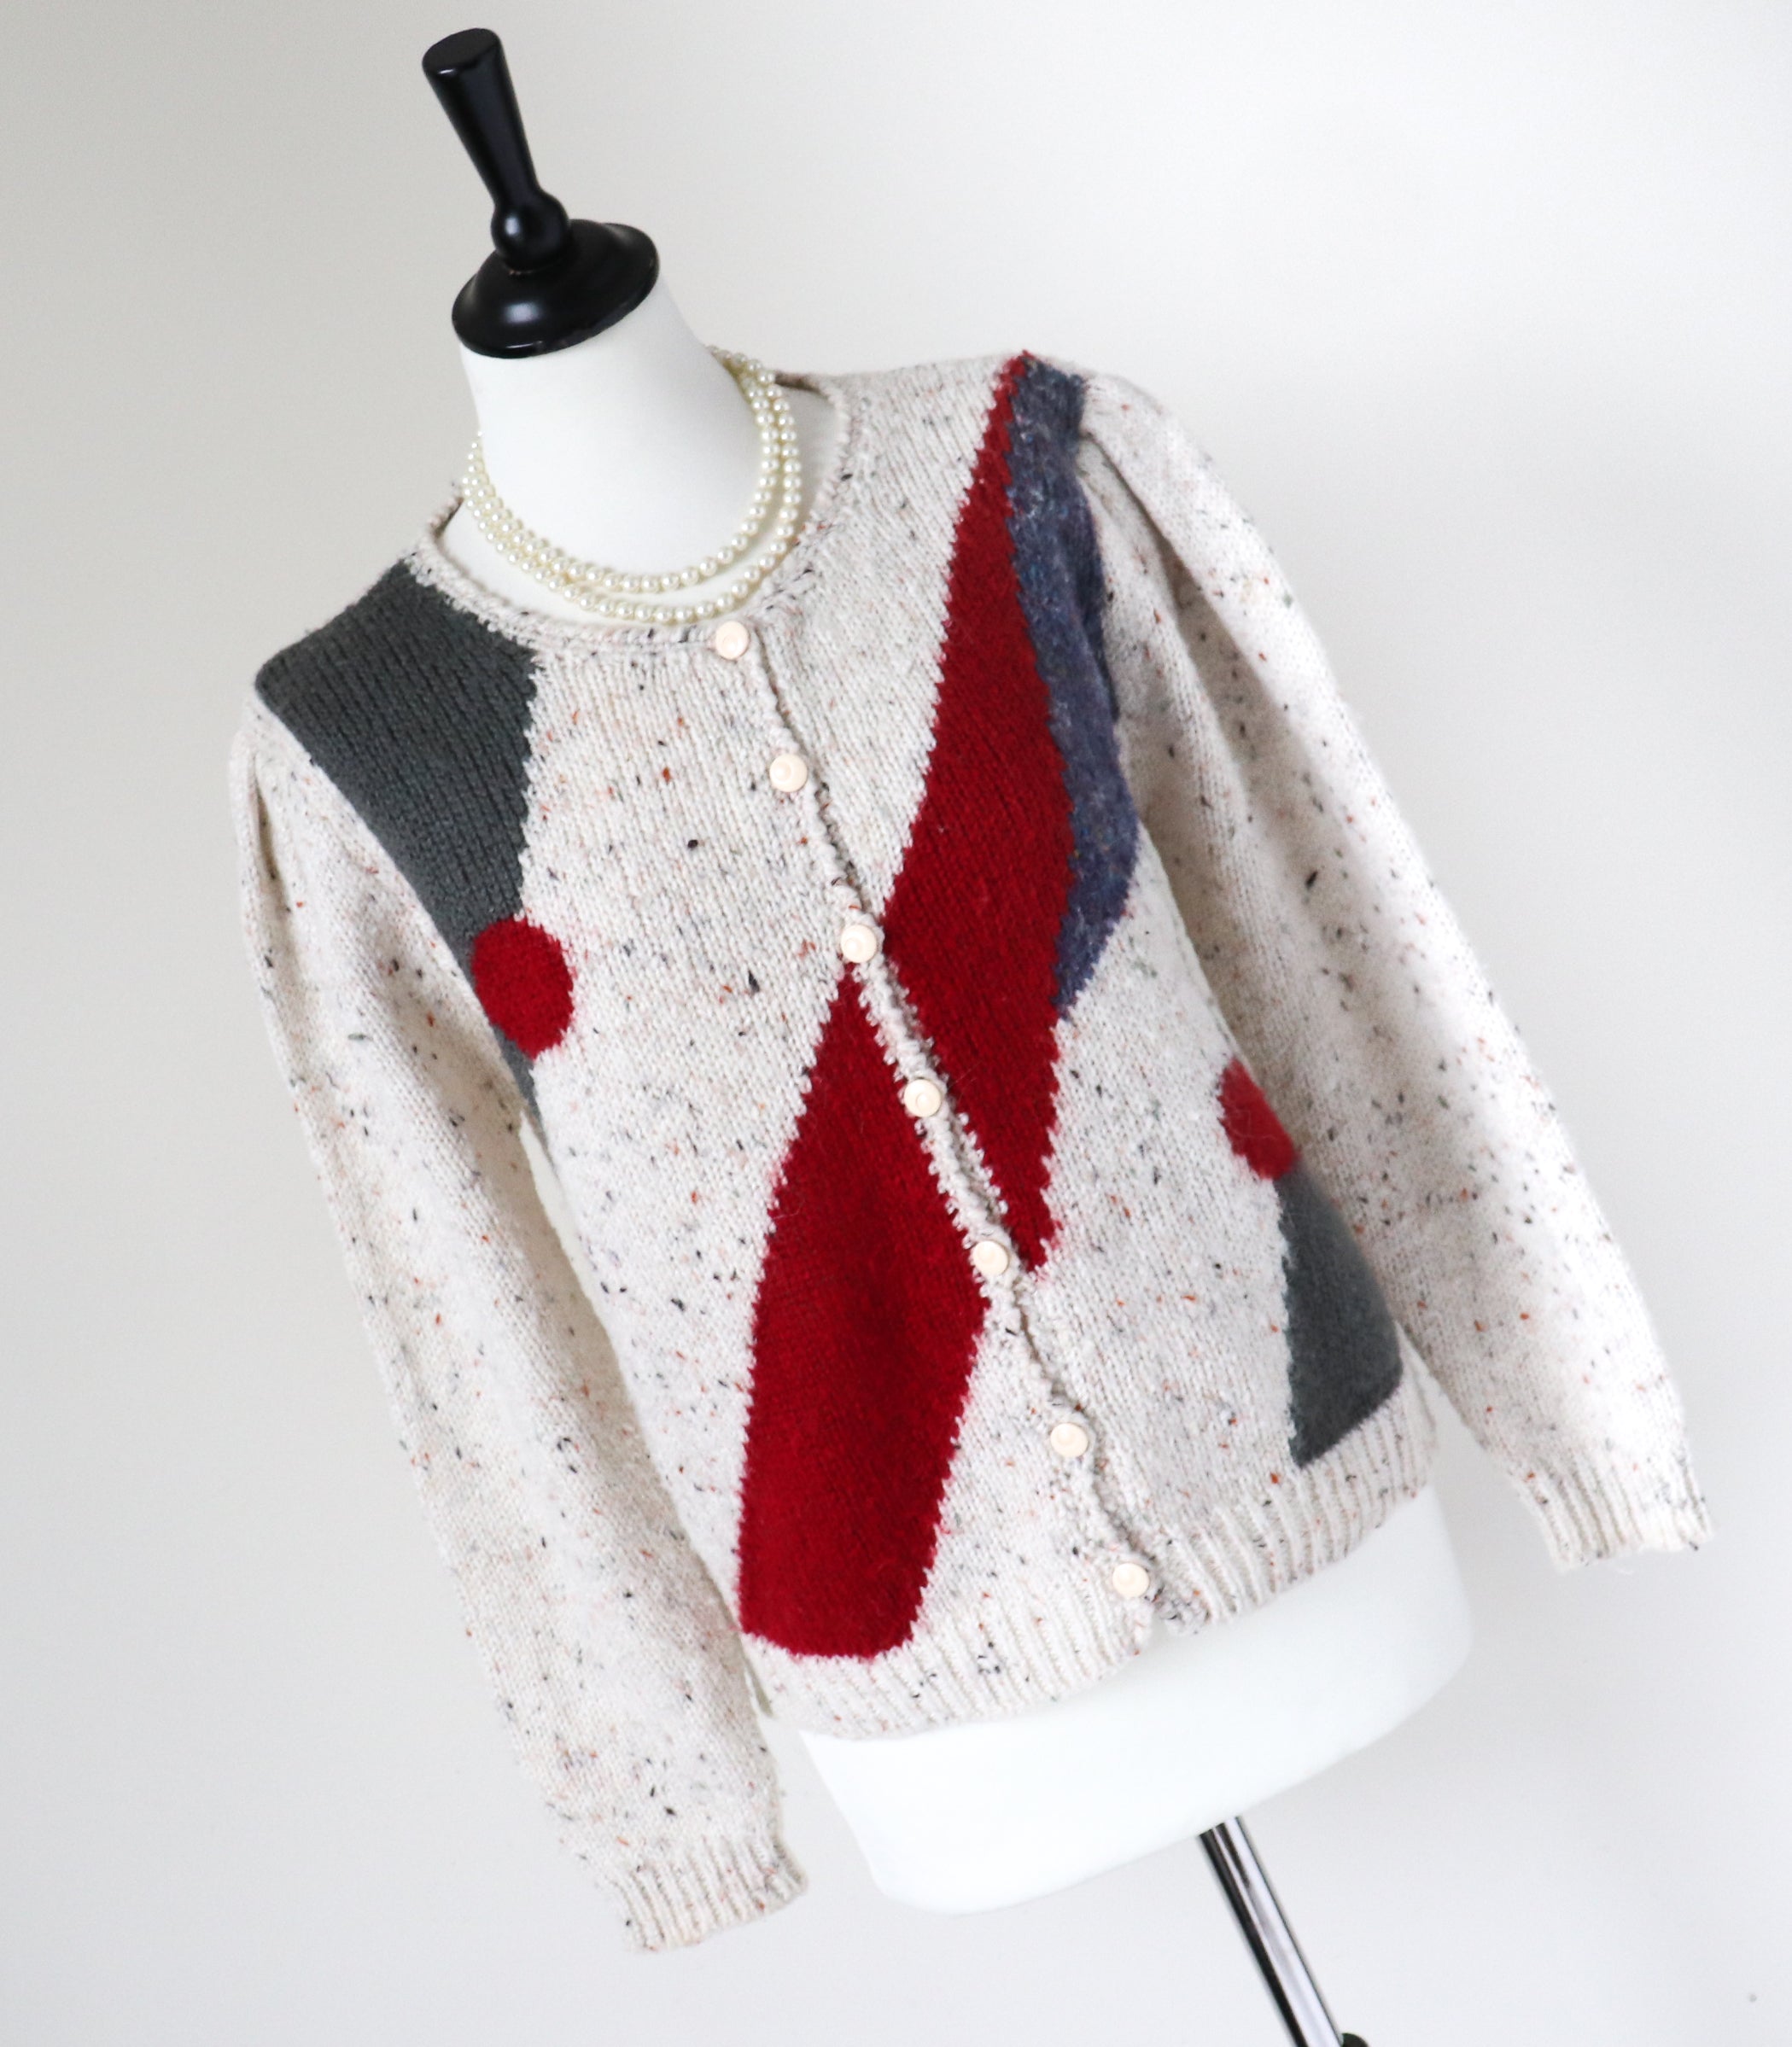 1980s Vintage Wool Blend Cardigan - 1940s Shape - M /  UK 12